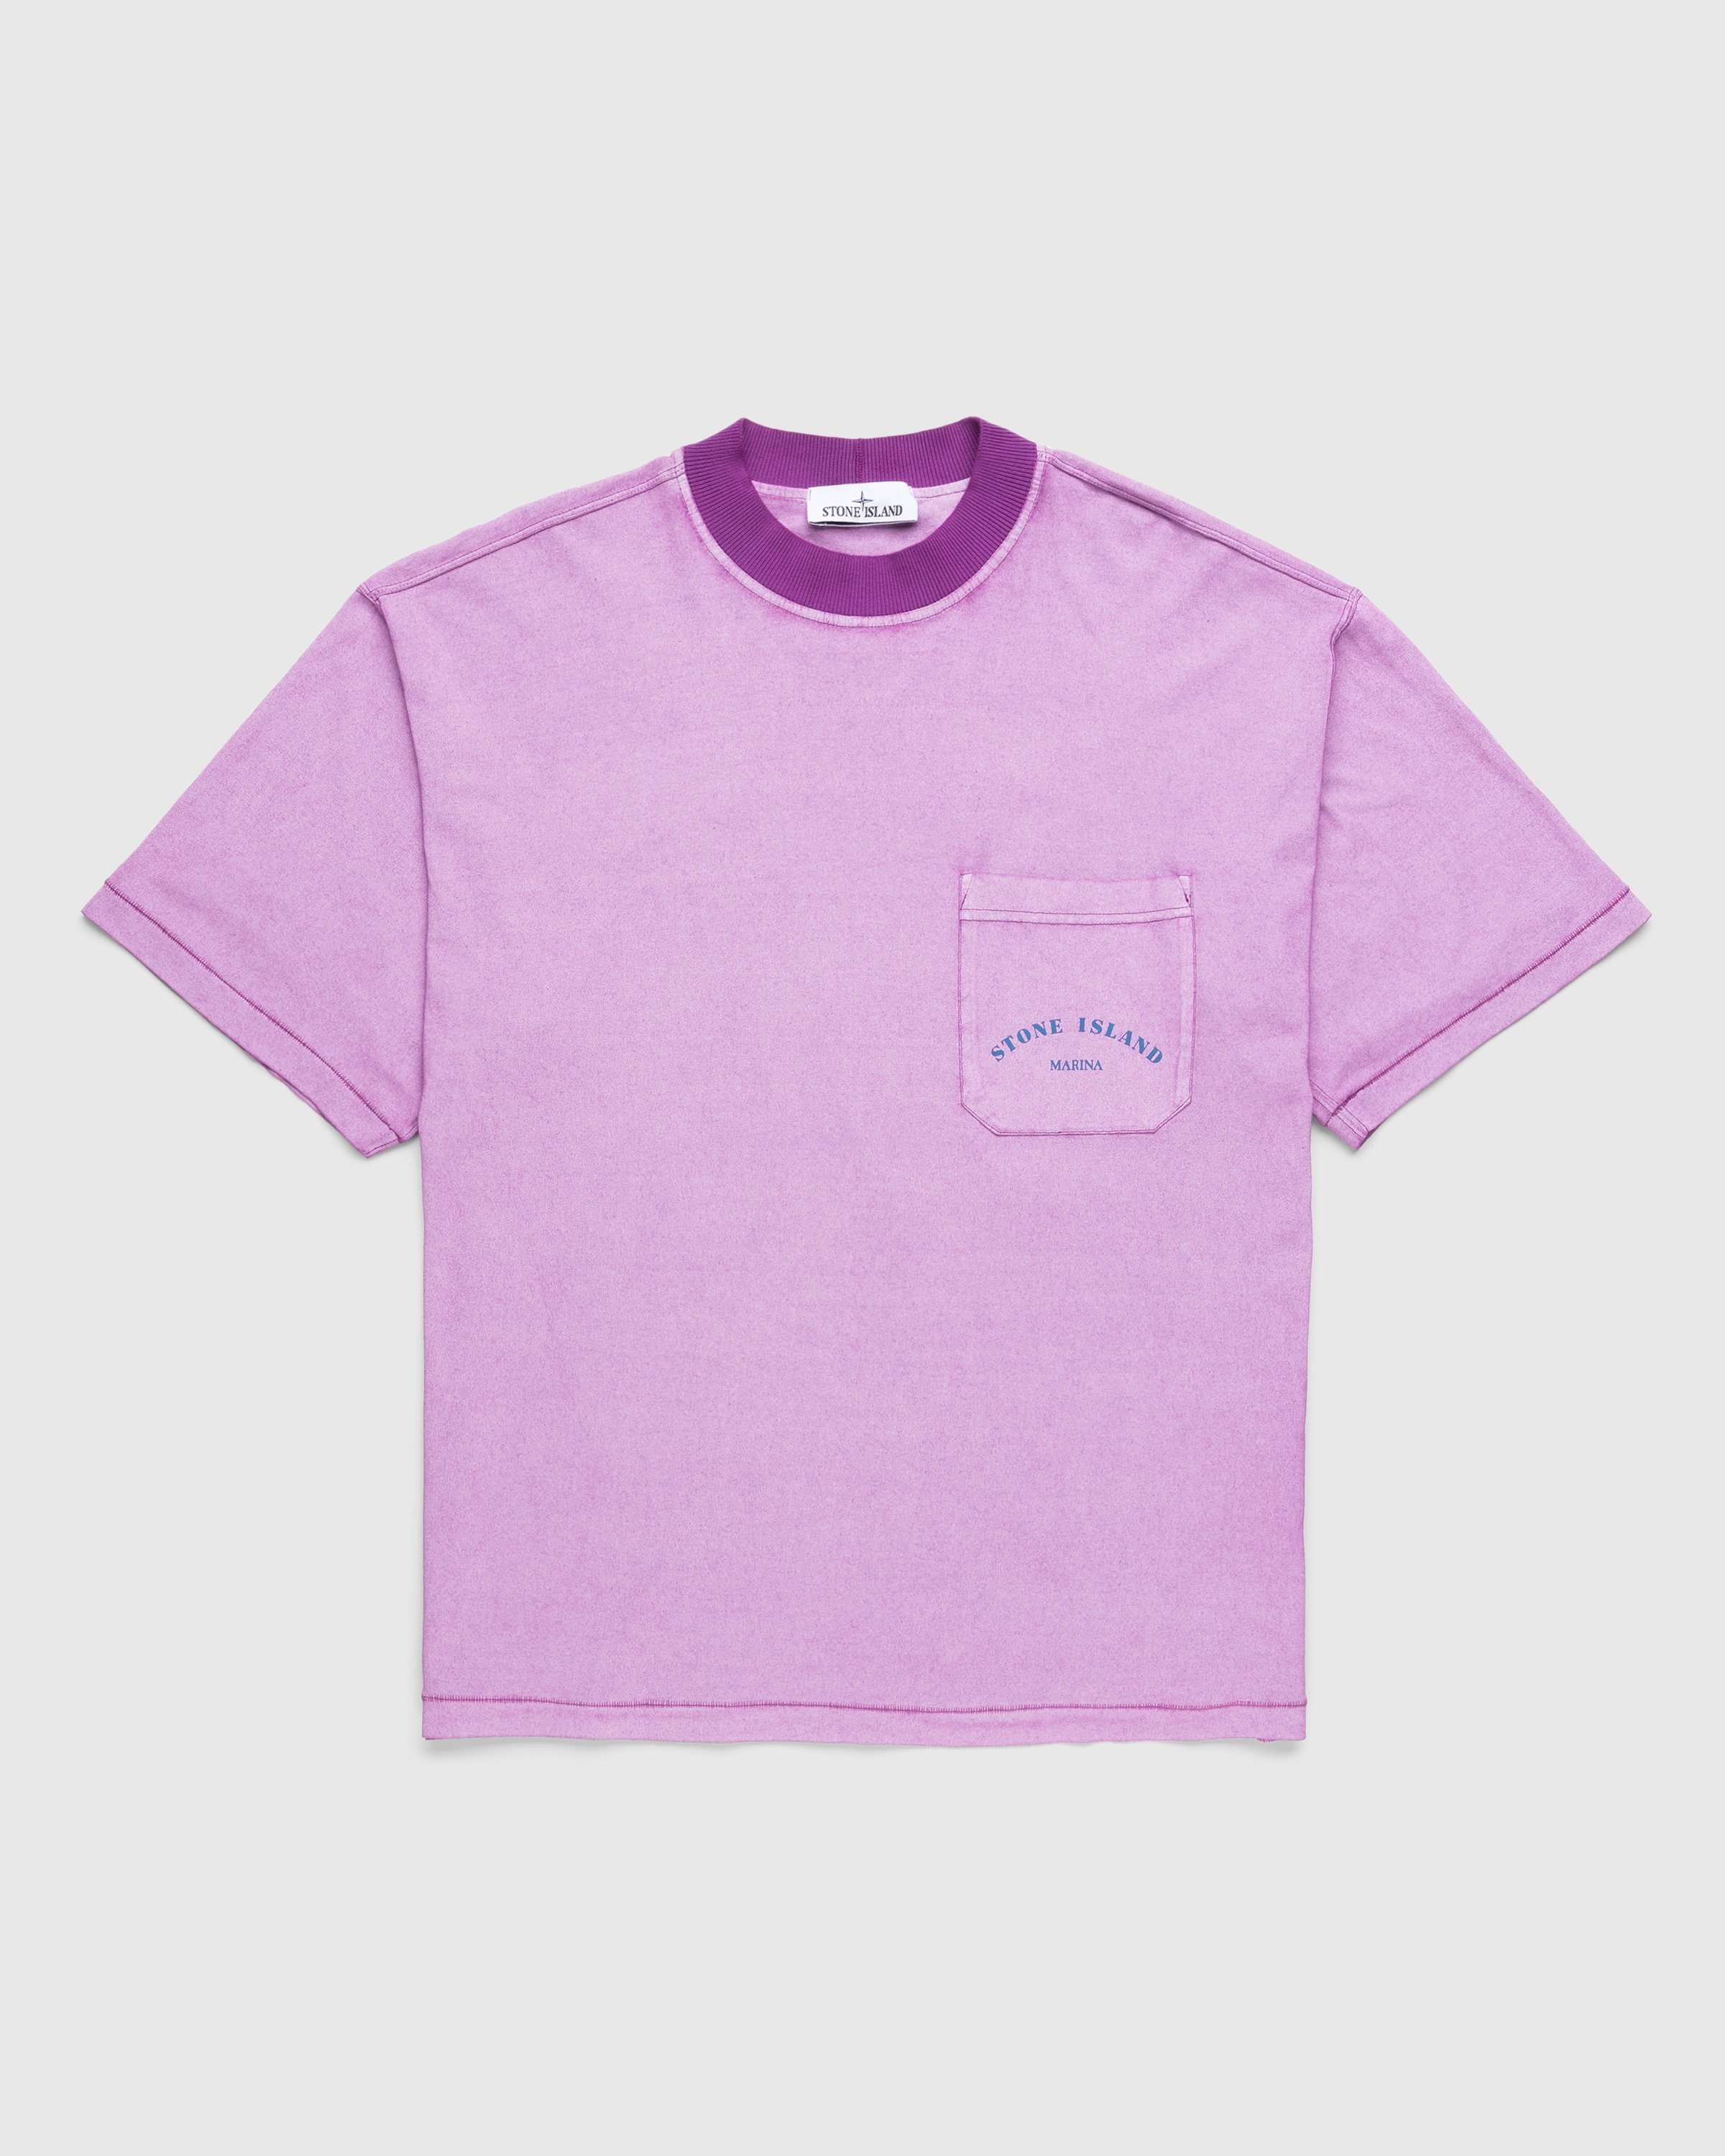 Stone Island – T-Shirt Pink 216X4 | Highsnobiety Shop